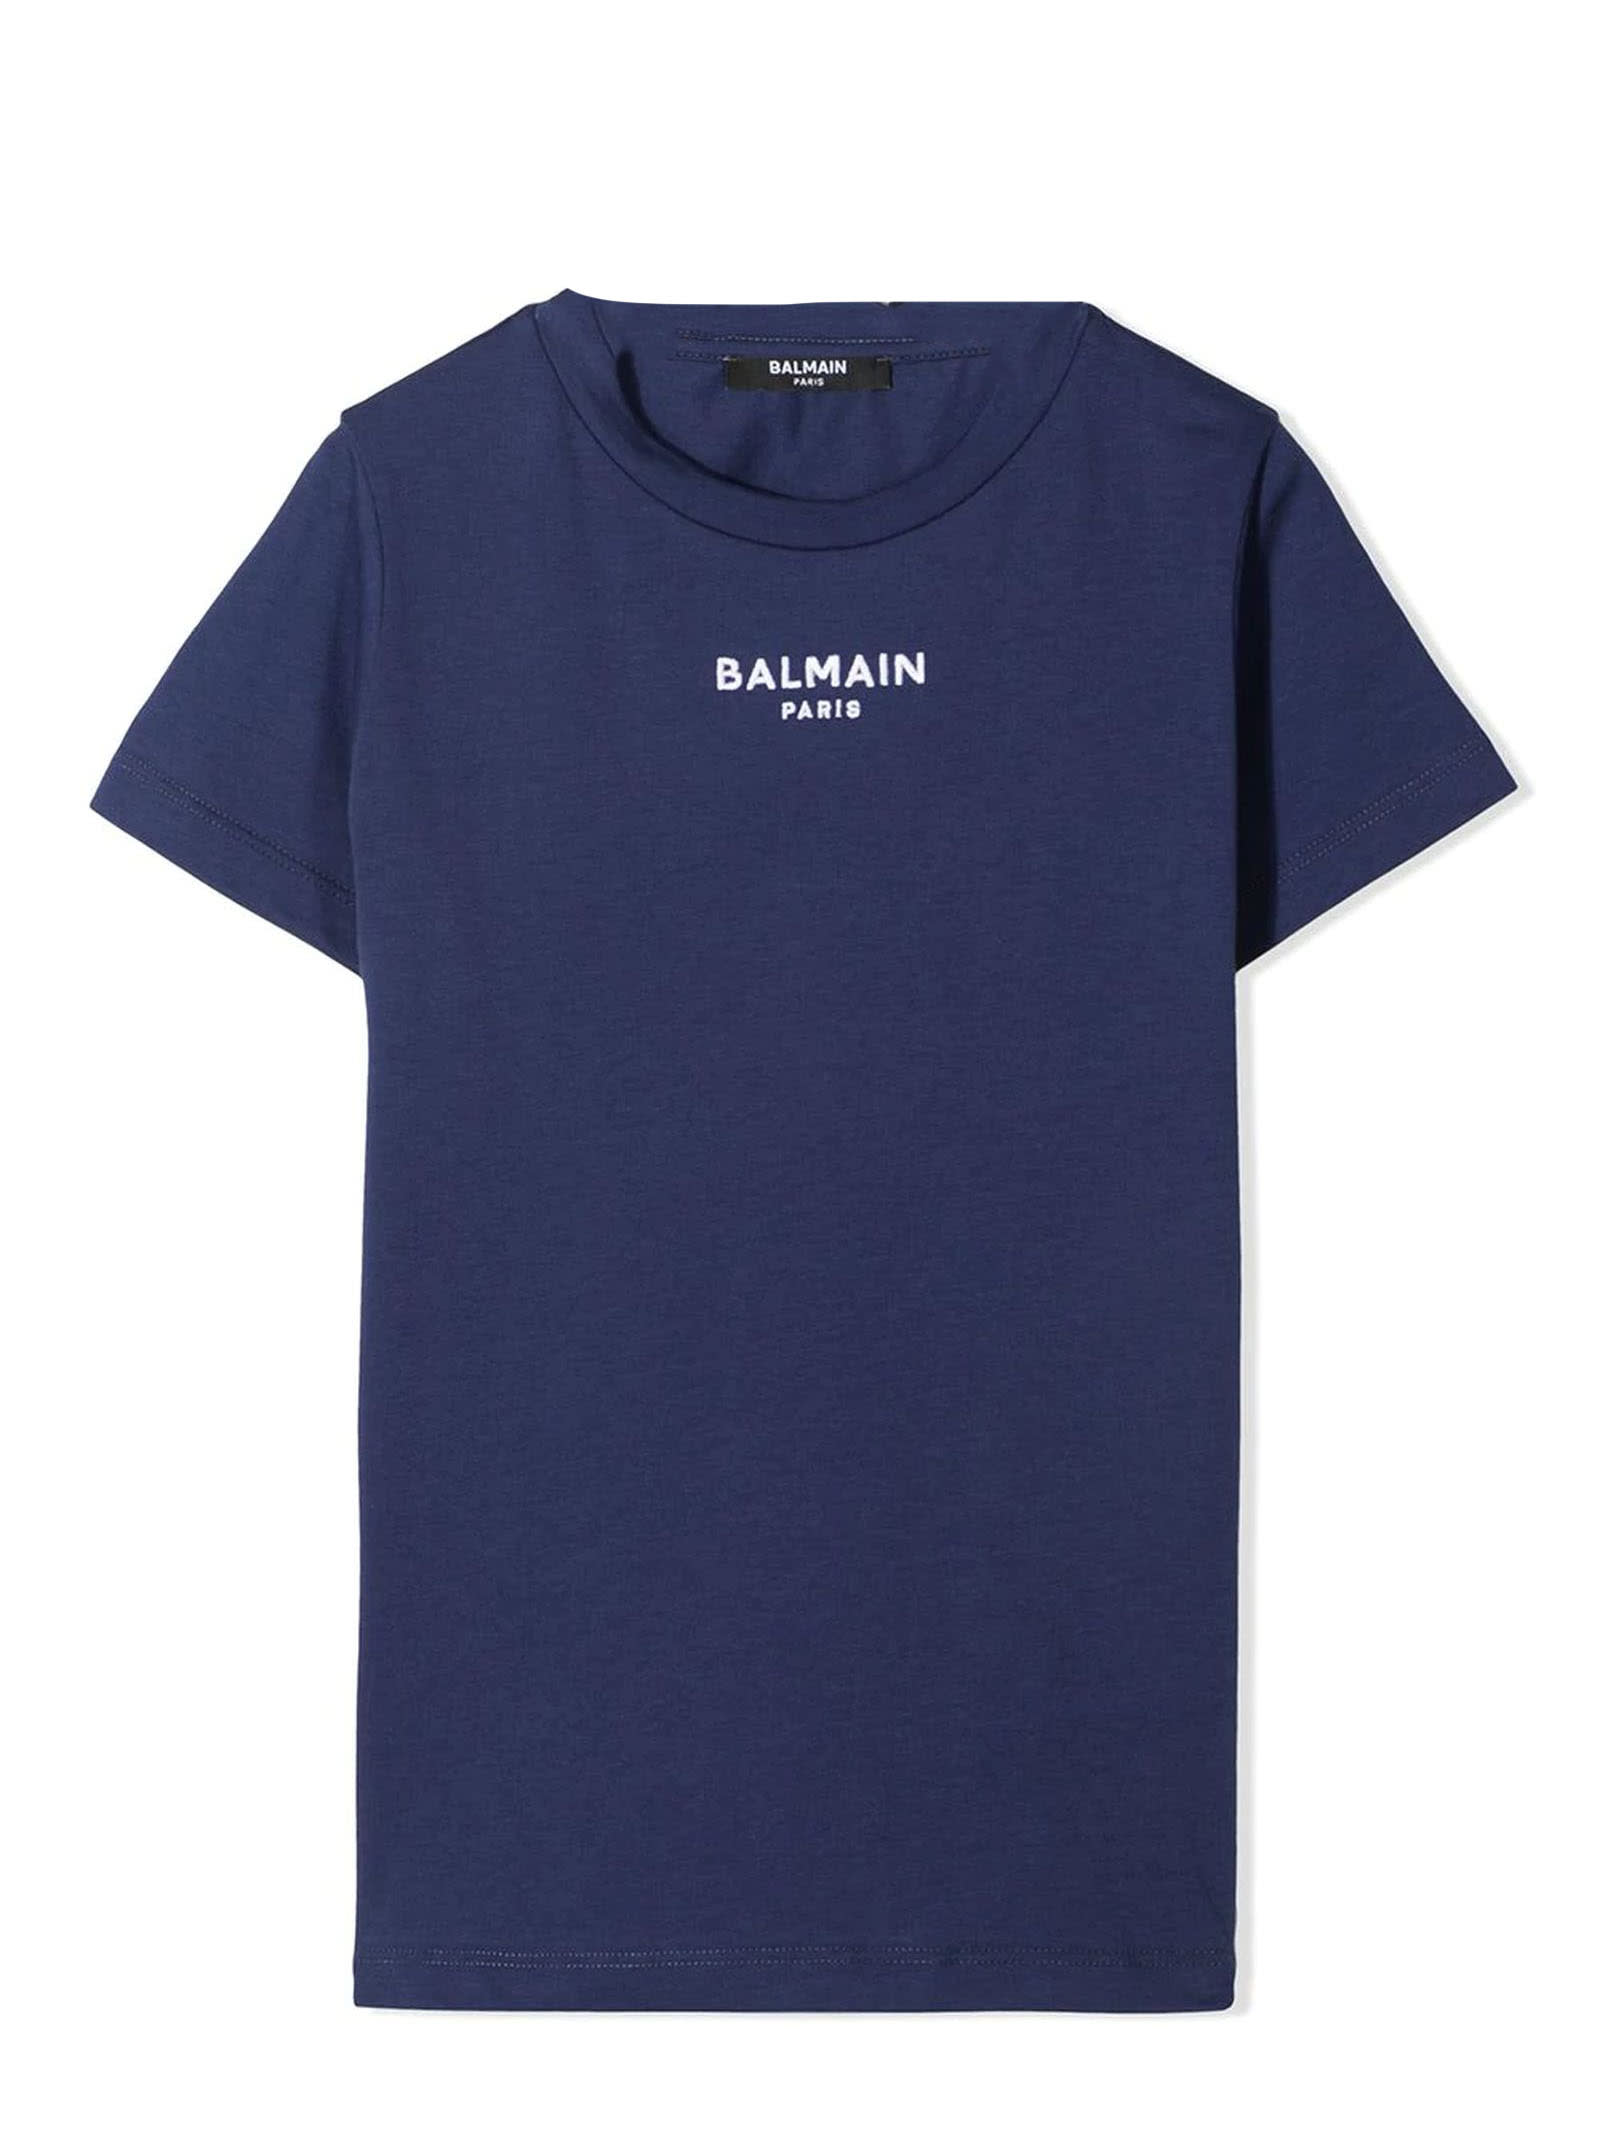 Balmain Blue Cotton T-shirt